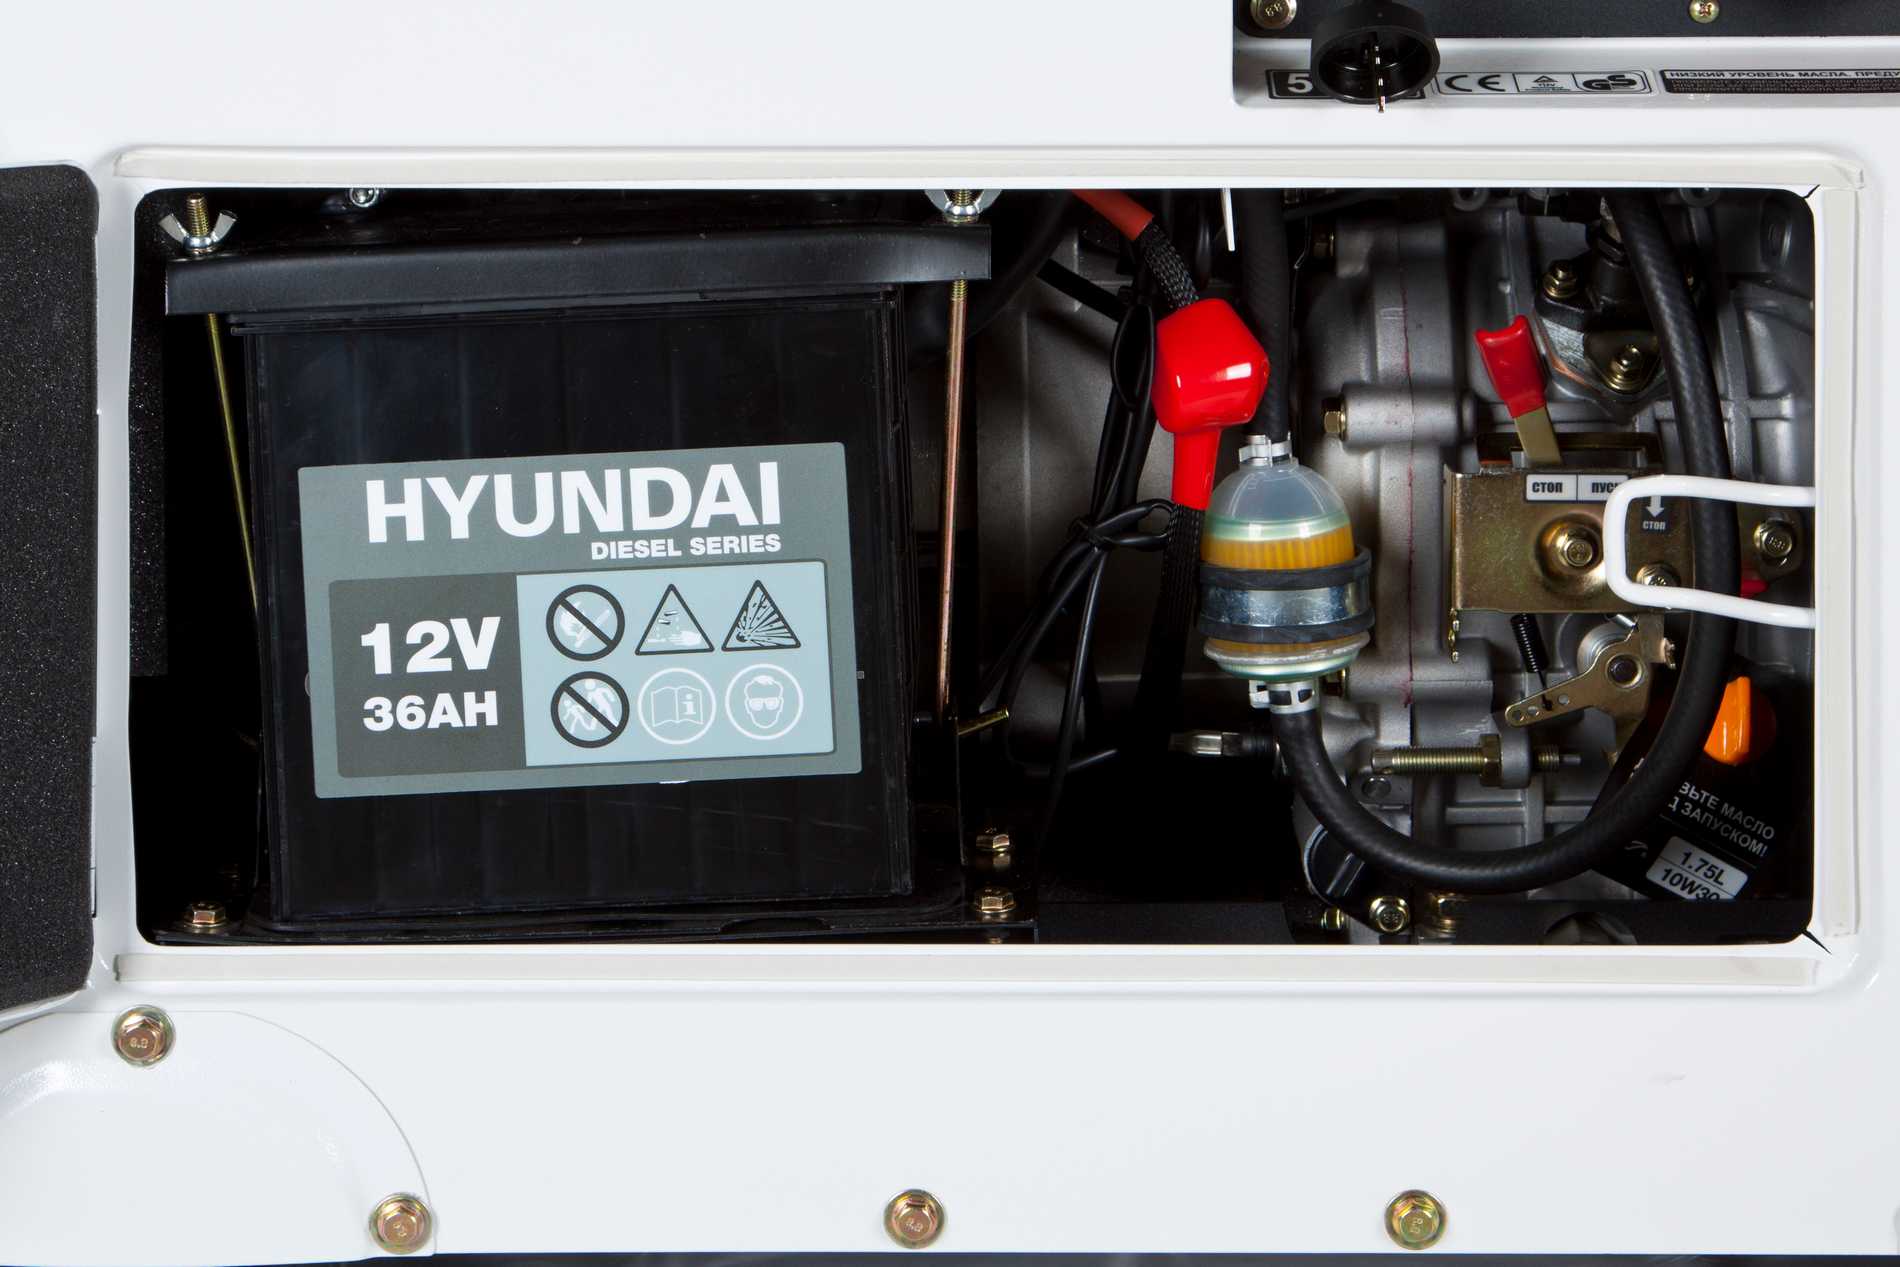 Генератор Hyundai DHY 8500SE-T інструкція - зображення 6